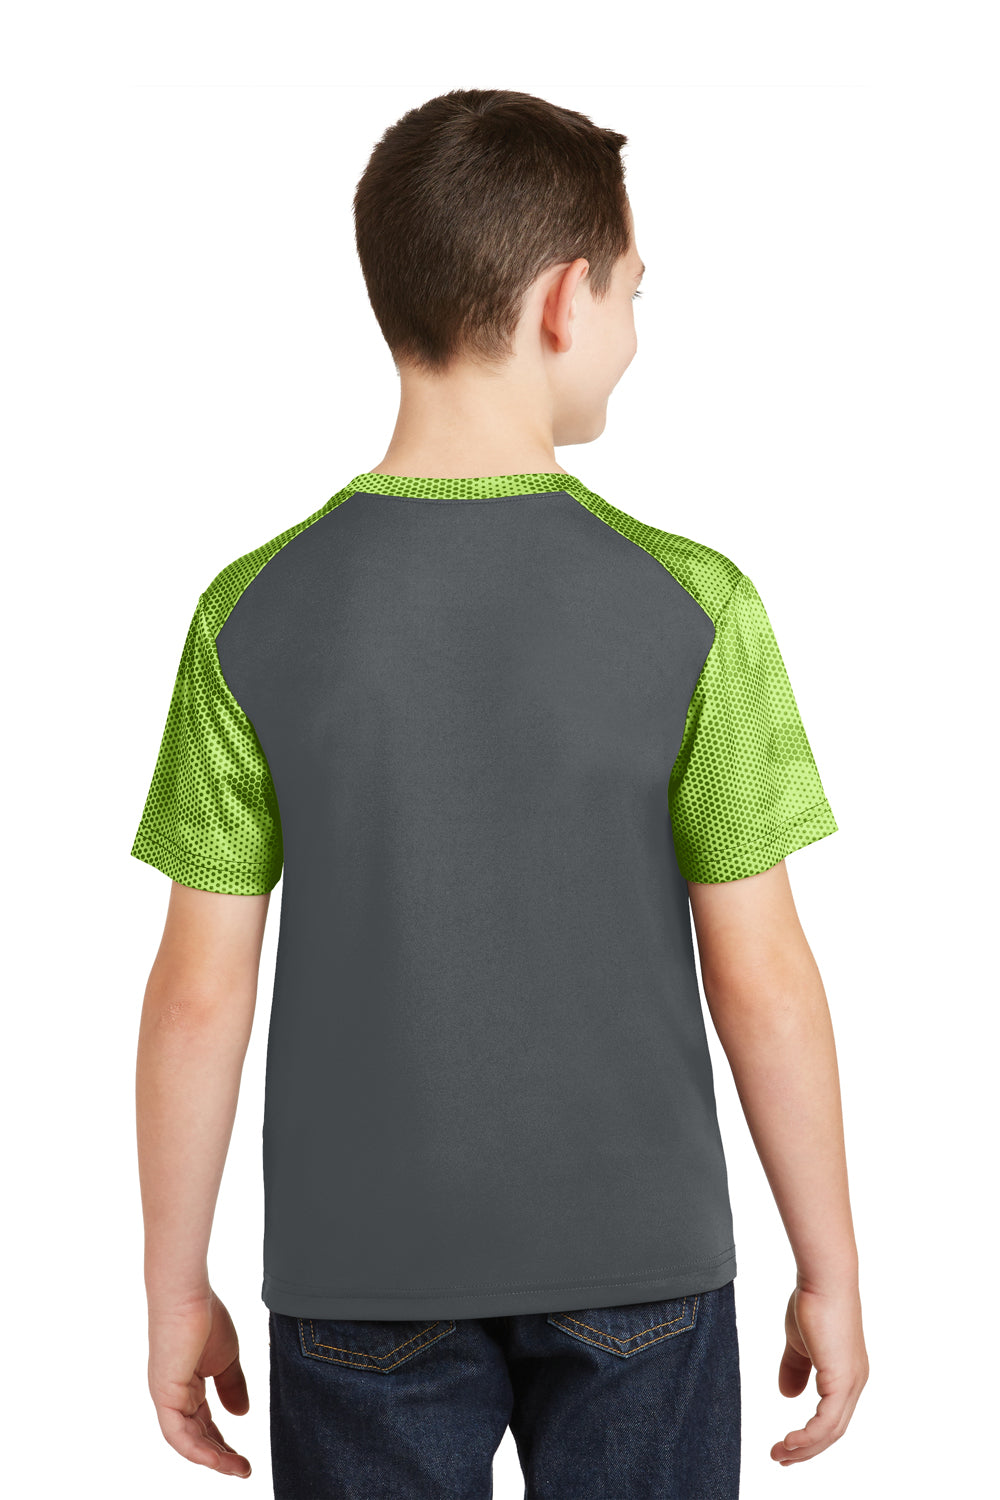 Sport-Tek YST371 Youth CamoHex Moisture Wicking Short Sleeve Crewneck T-Shirt Iron Grey/Lime Green Back